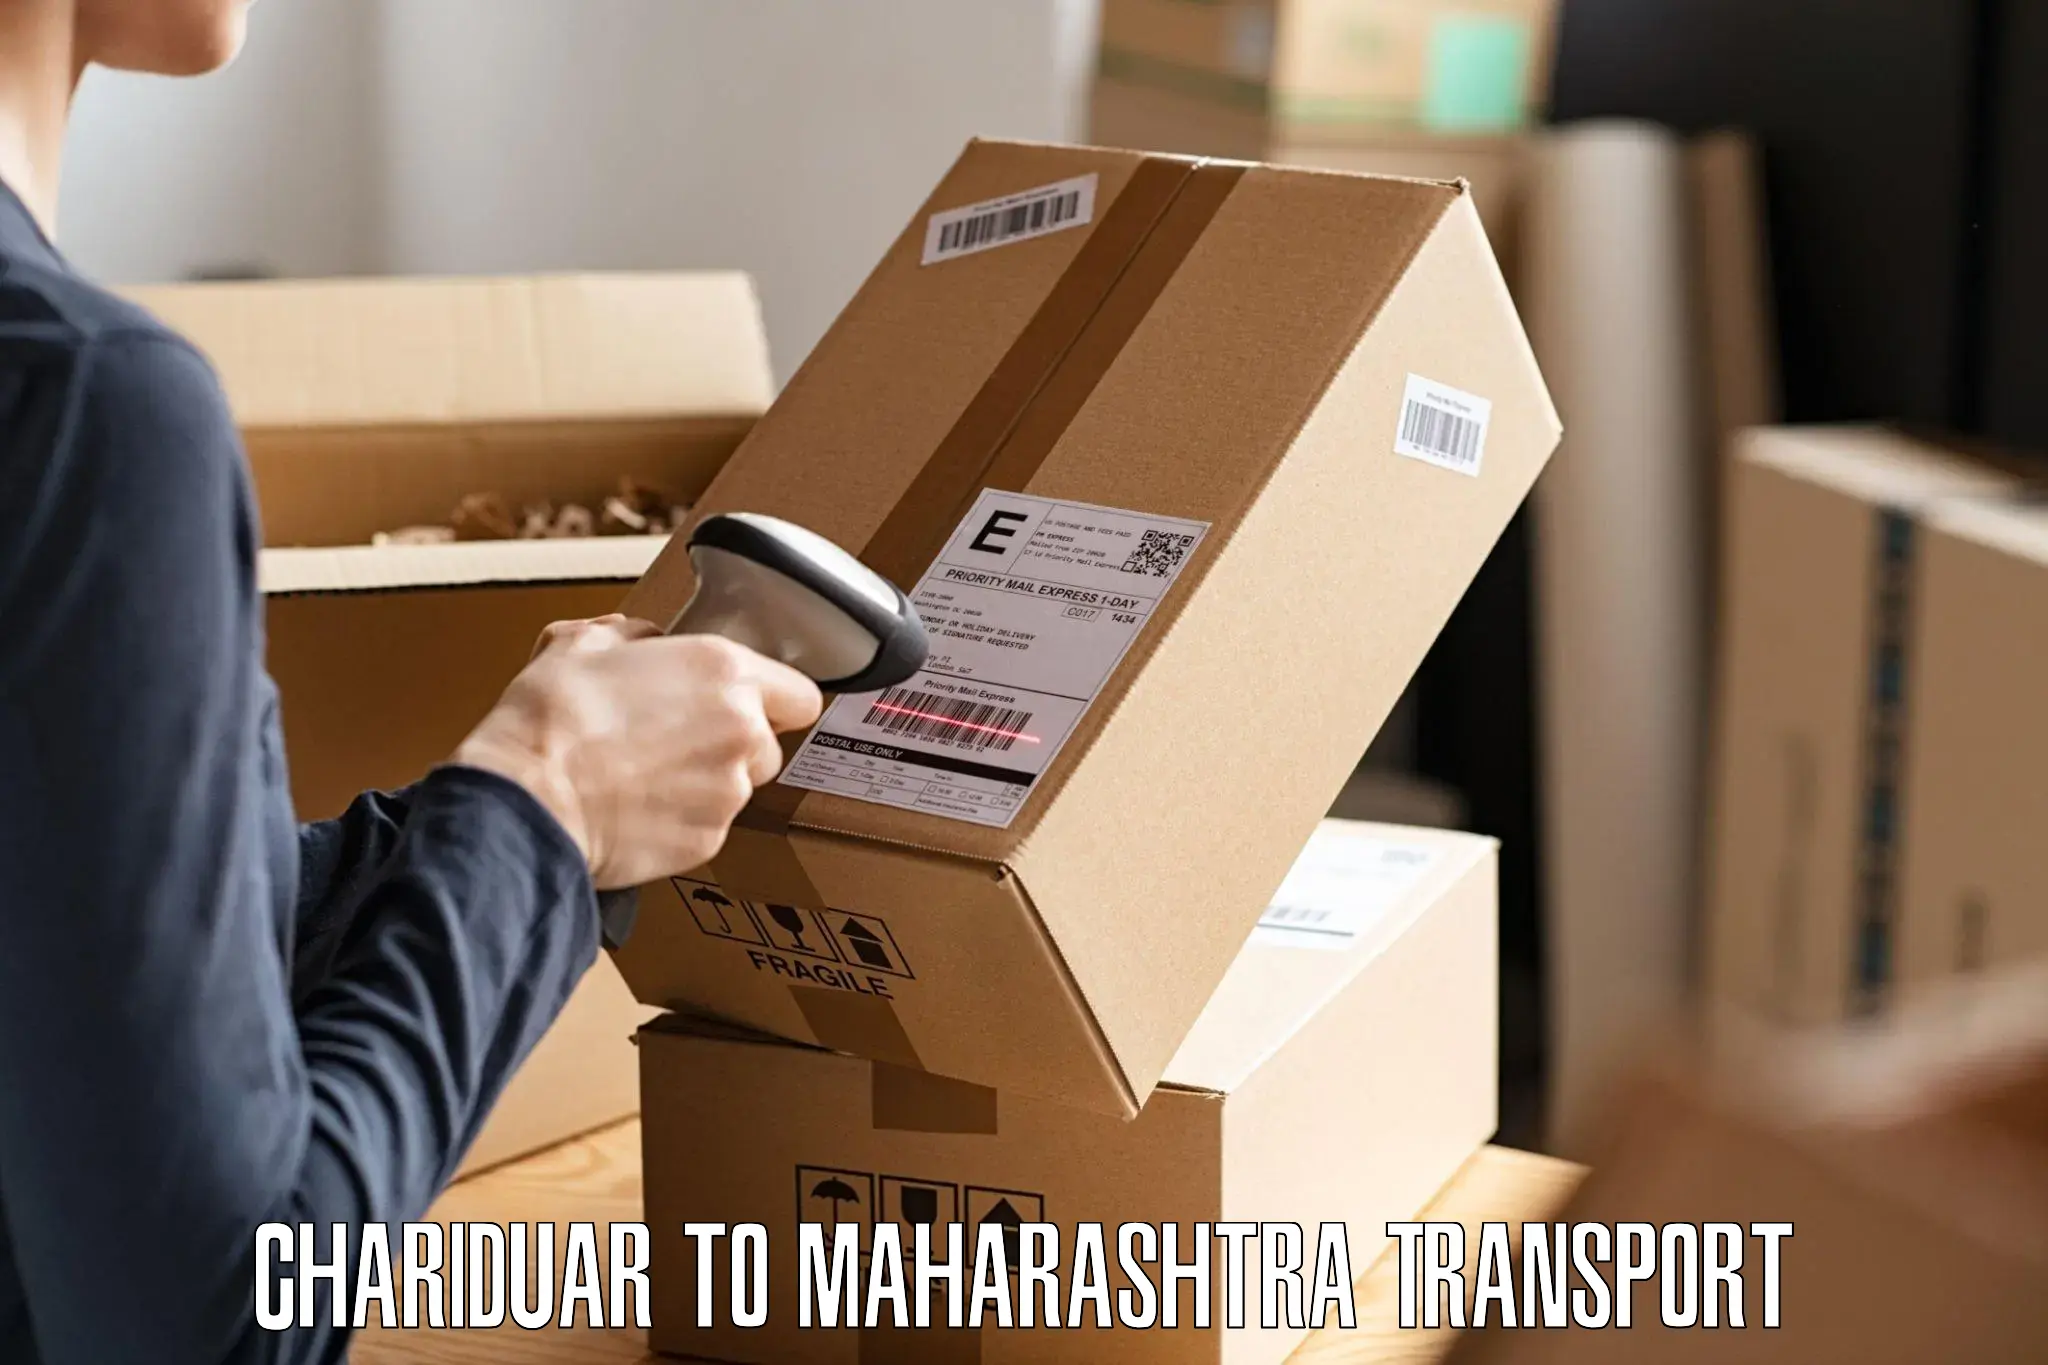 Furniture transport service Chariduar to Walchandnagar